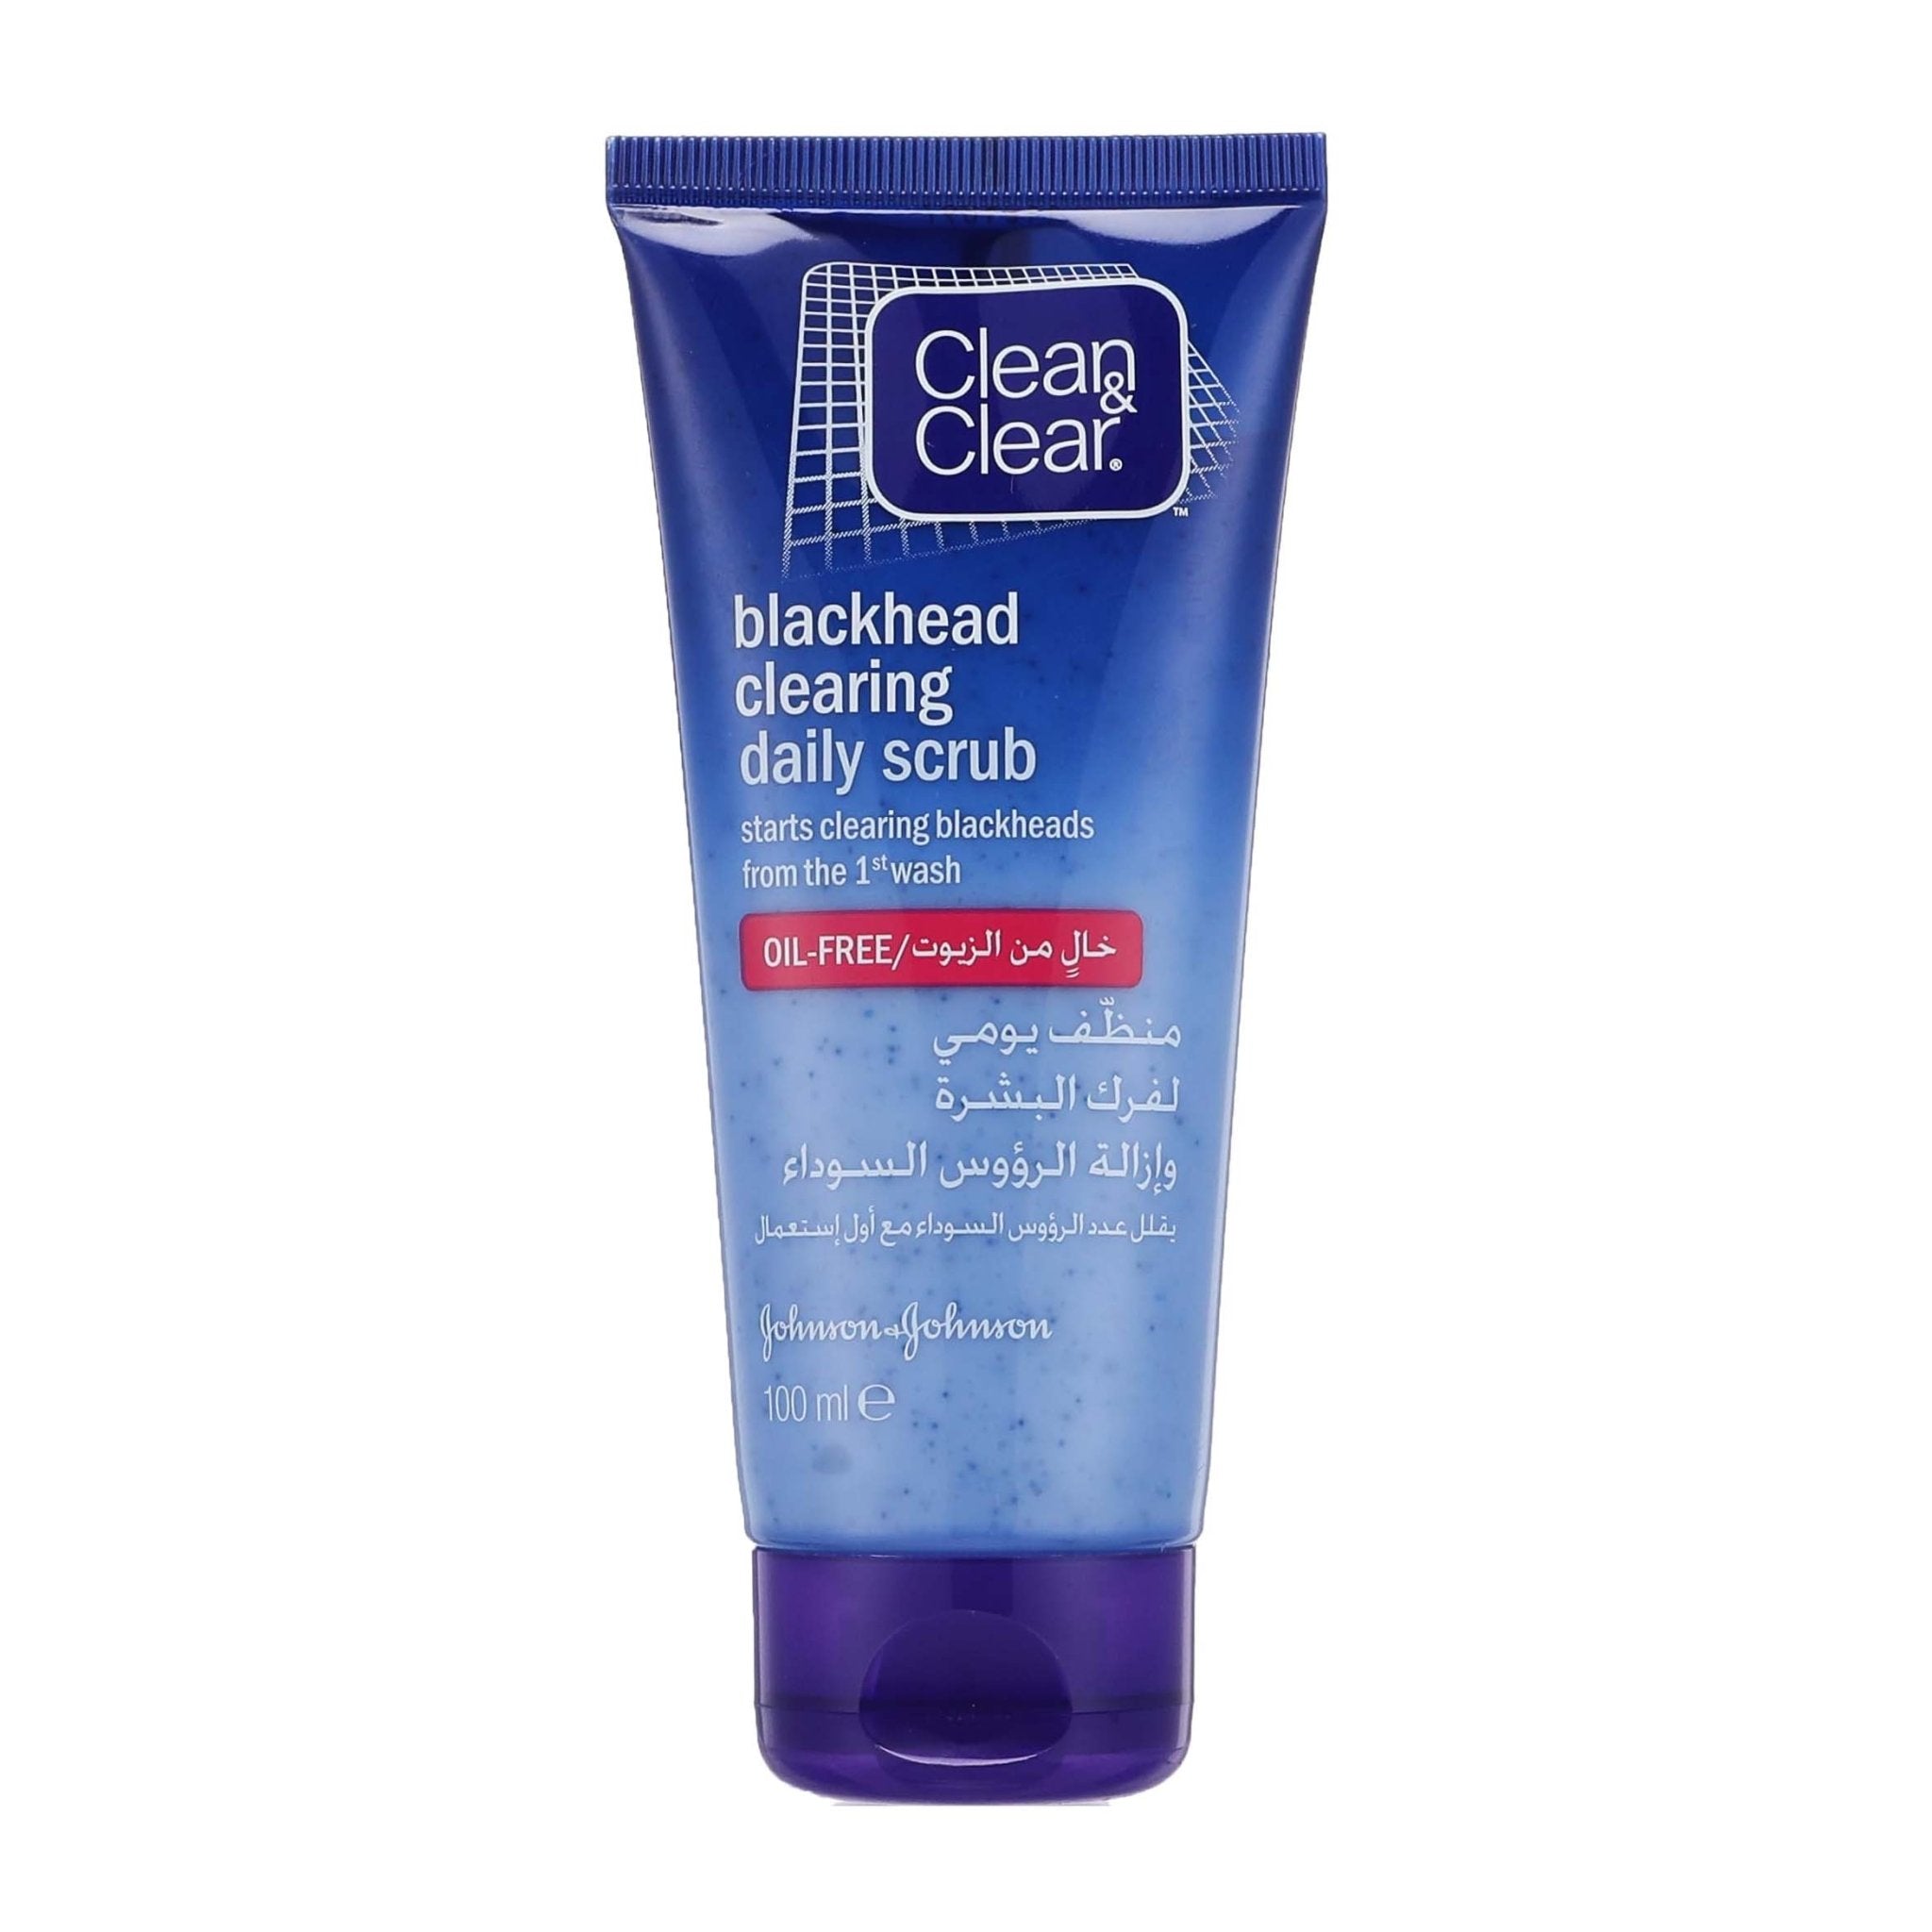 Clean & Clear Blackhead Clearing Daily Scrub – 100ml - Bloom Pharmacy